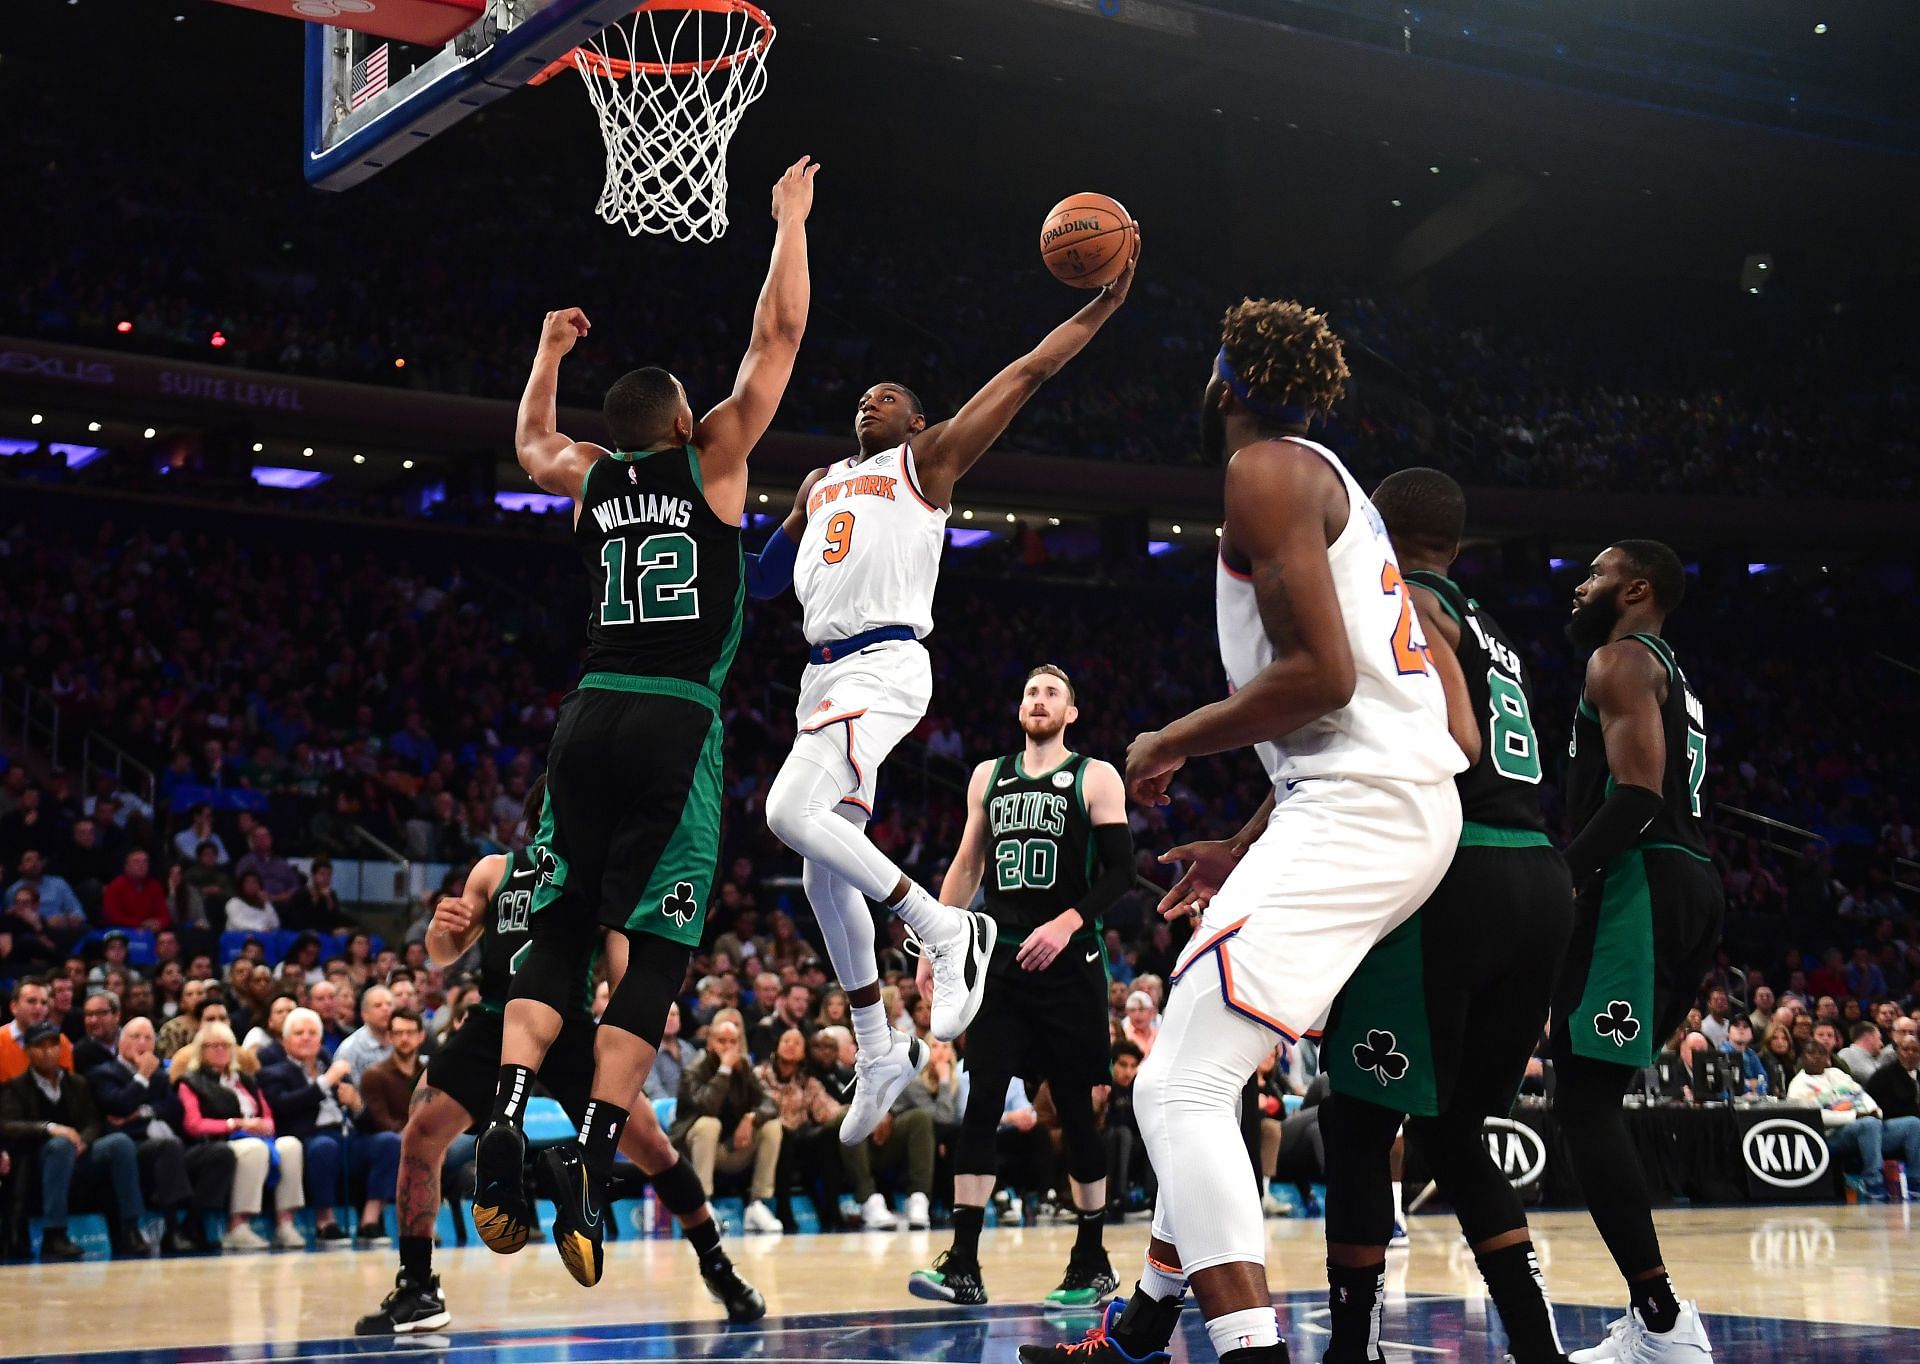 The New York Knicks will host the Boston Celtics on January 6th